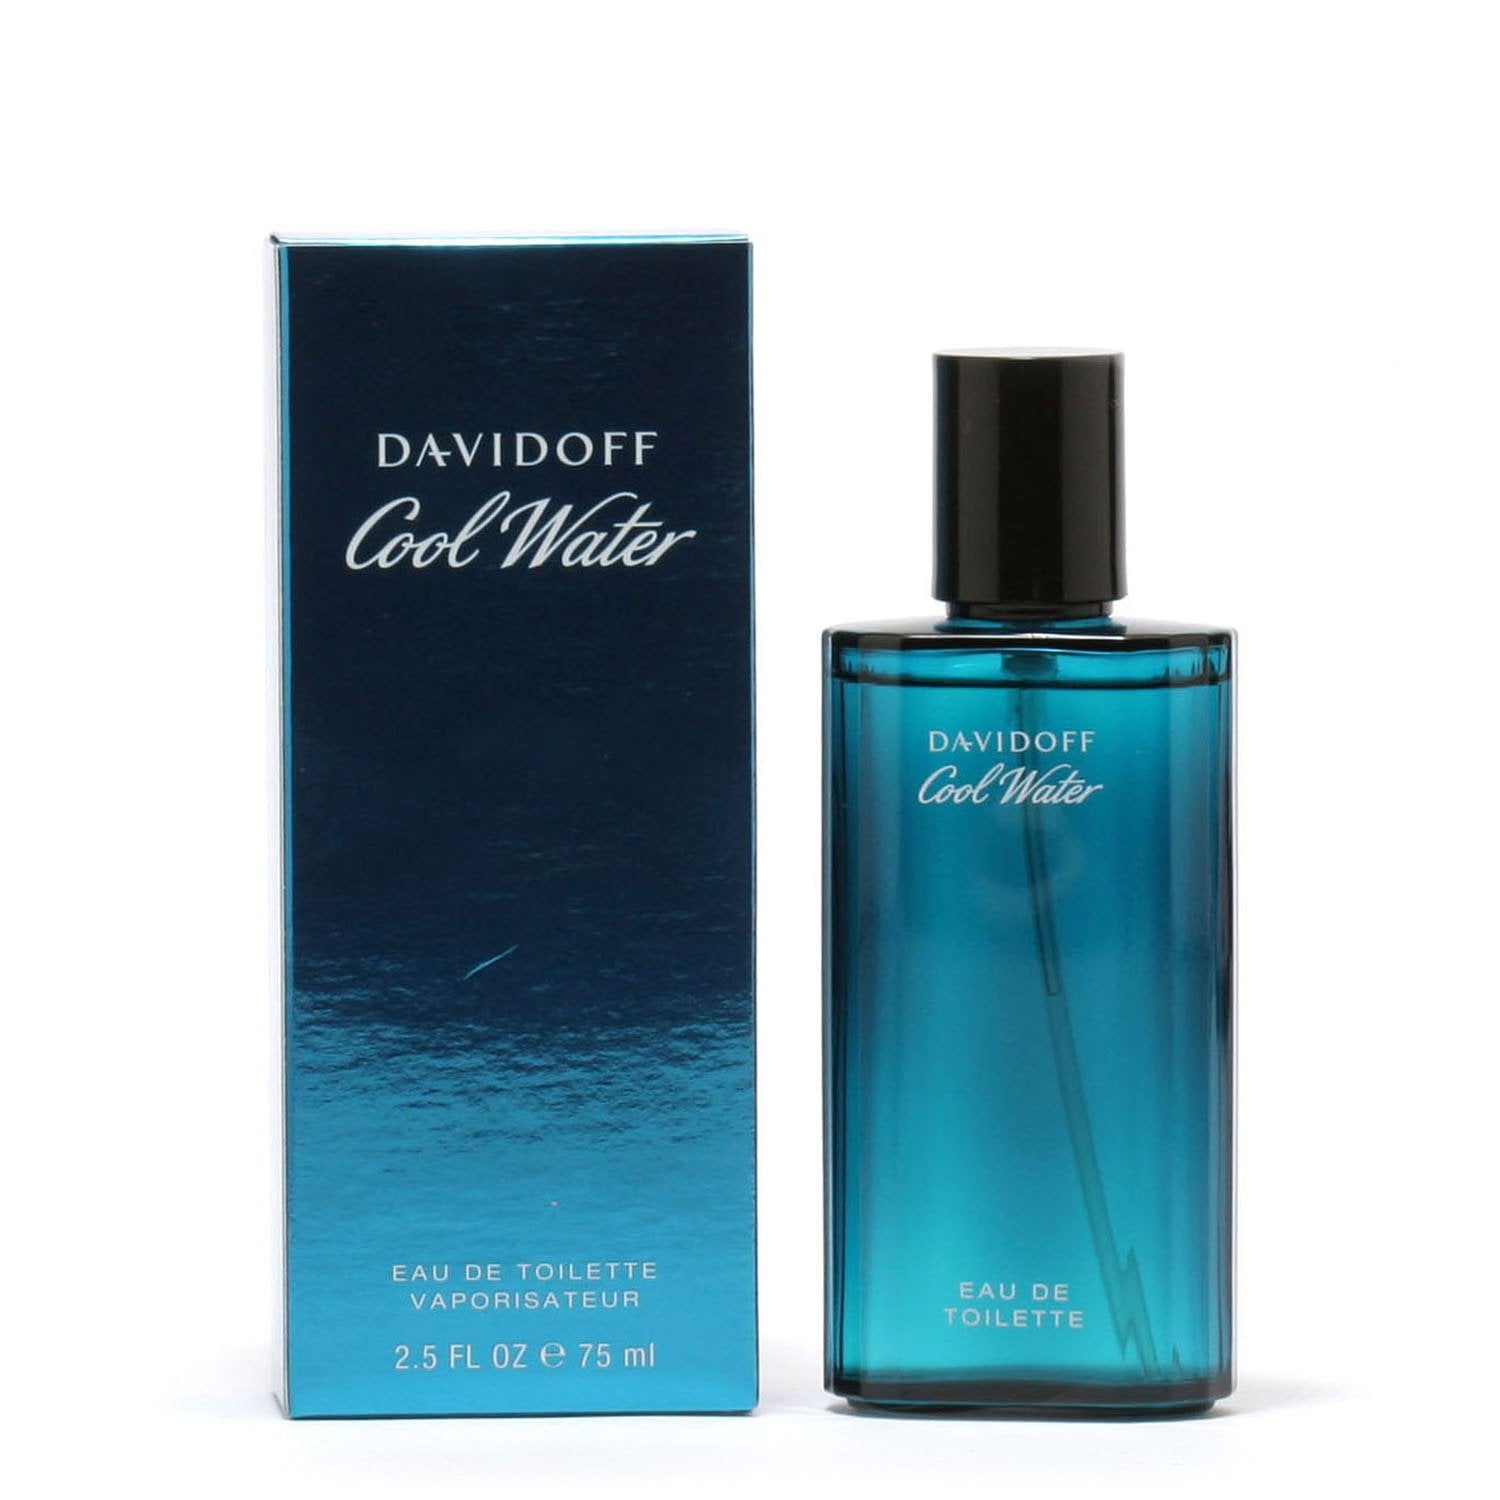 NAUTICA BLUE FOR MEN - EAU DE TOILETTE SPRAY, 3.4 OZ – Fragrance Room